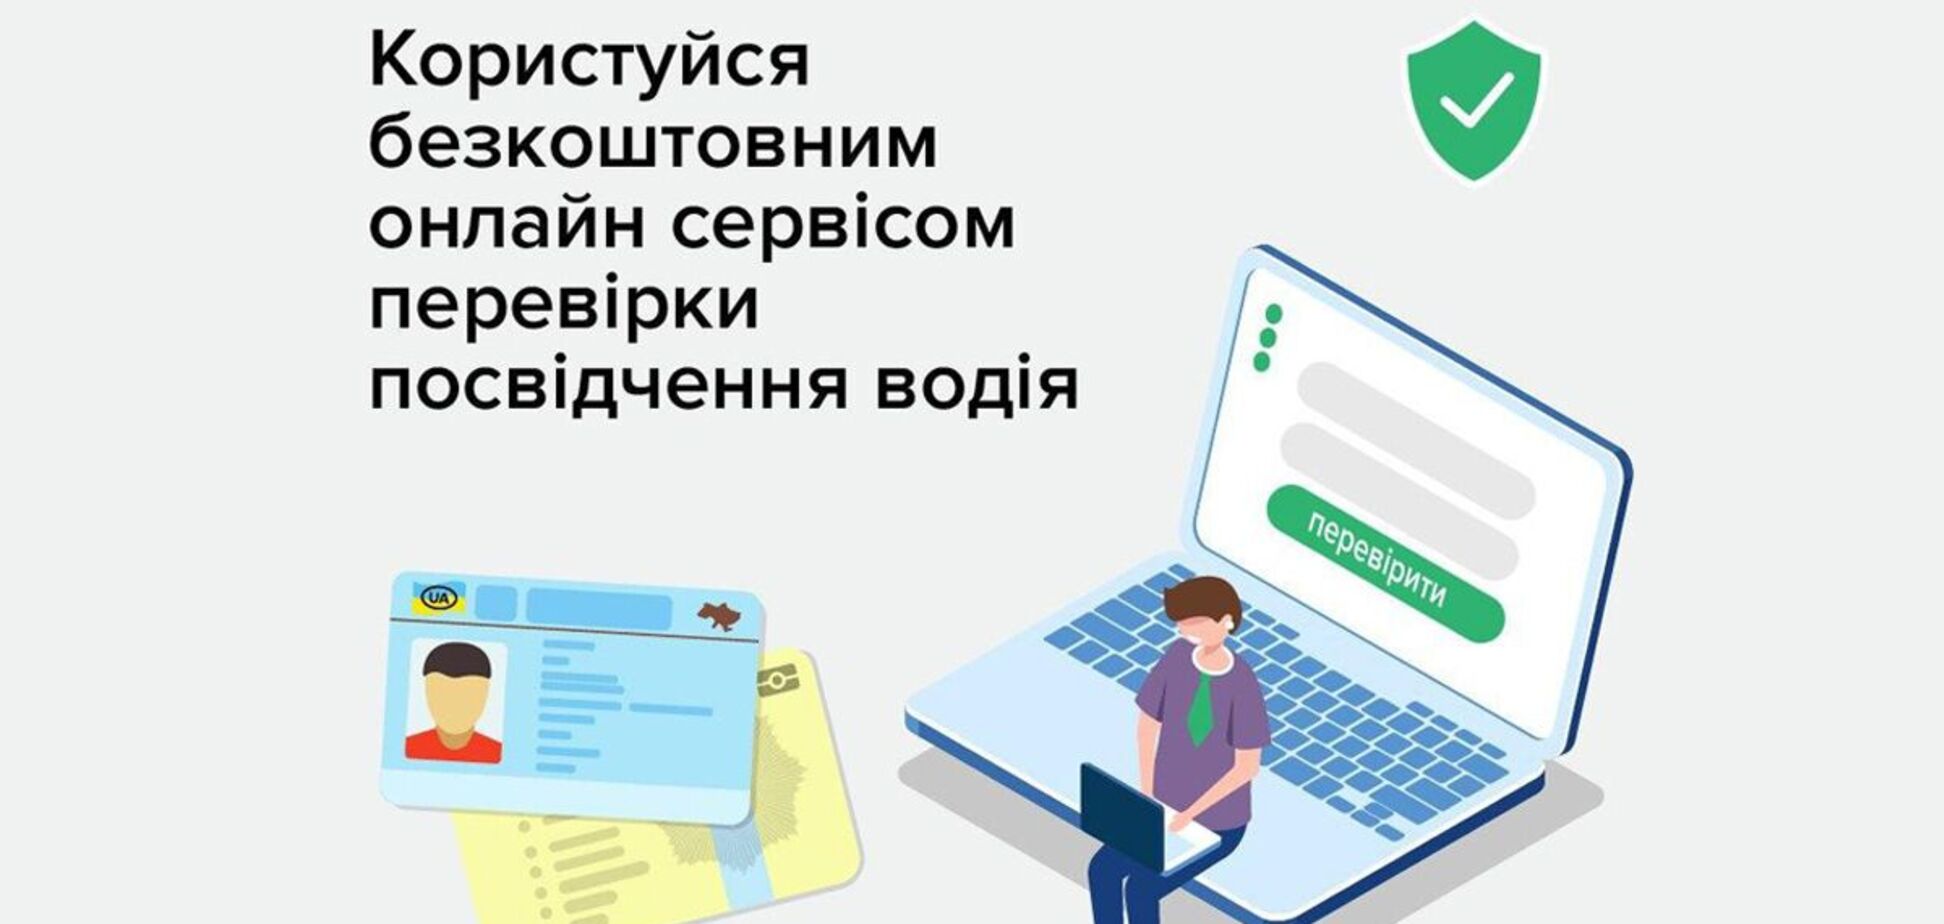 Сервисный центр МВД представил новый онлайн-сервис